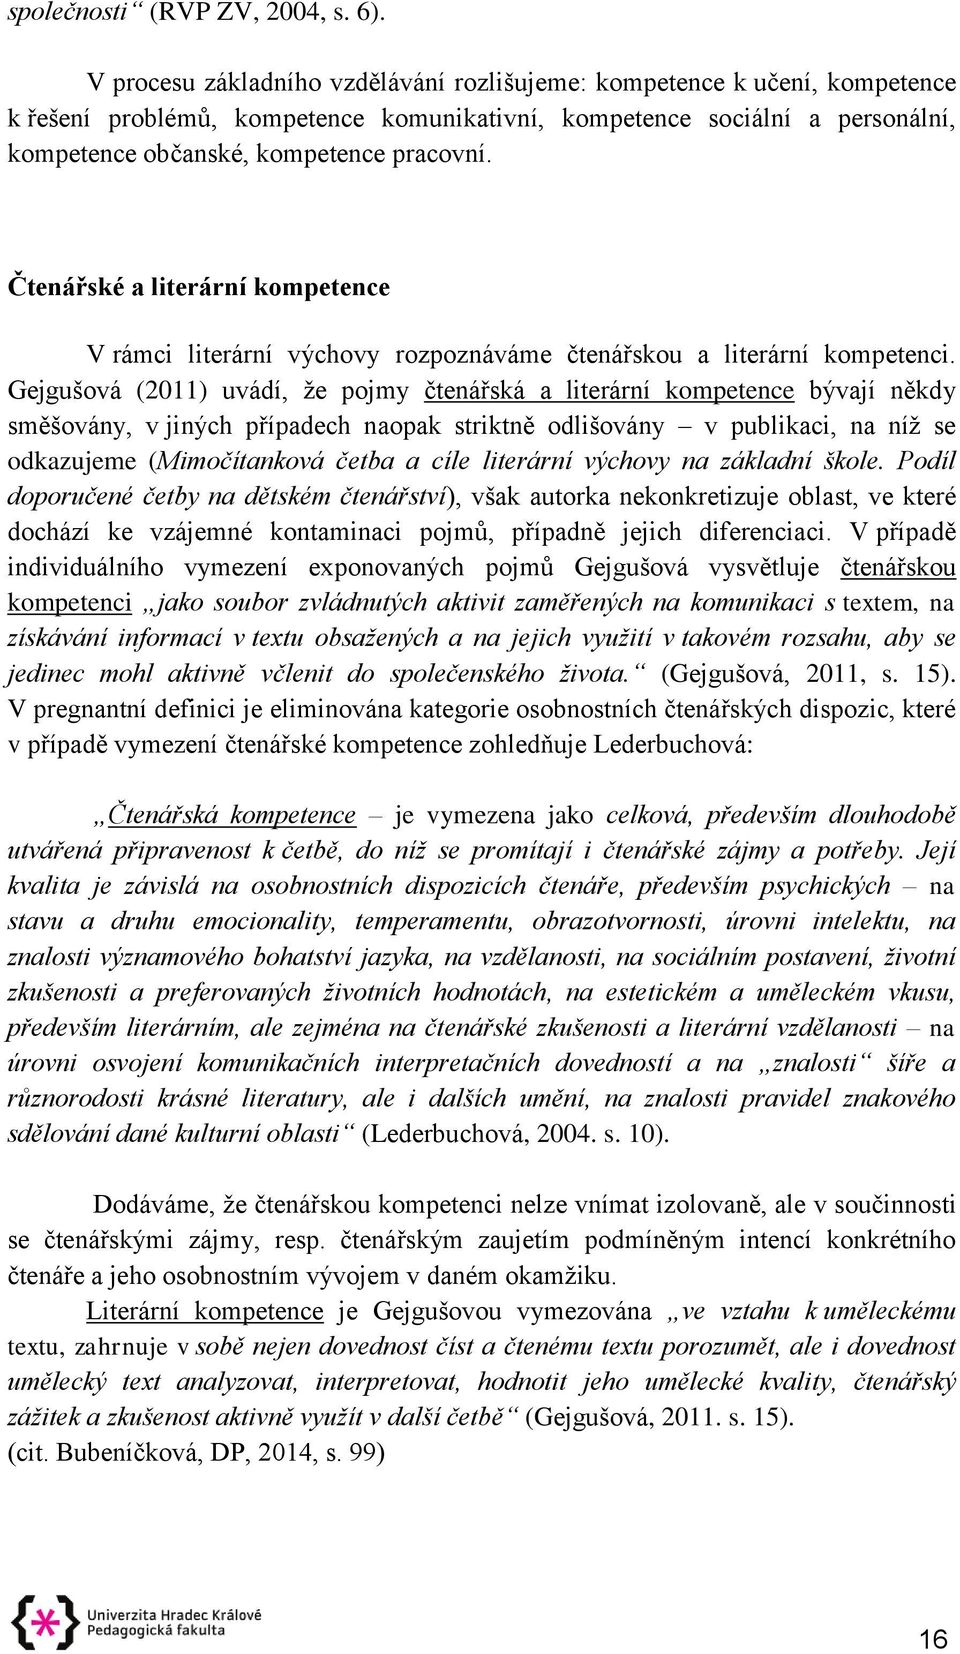 Didaktika literatury. Petra Bubeníčková - PDF Free Download